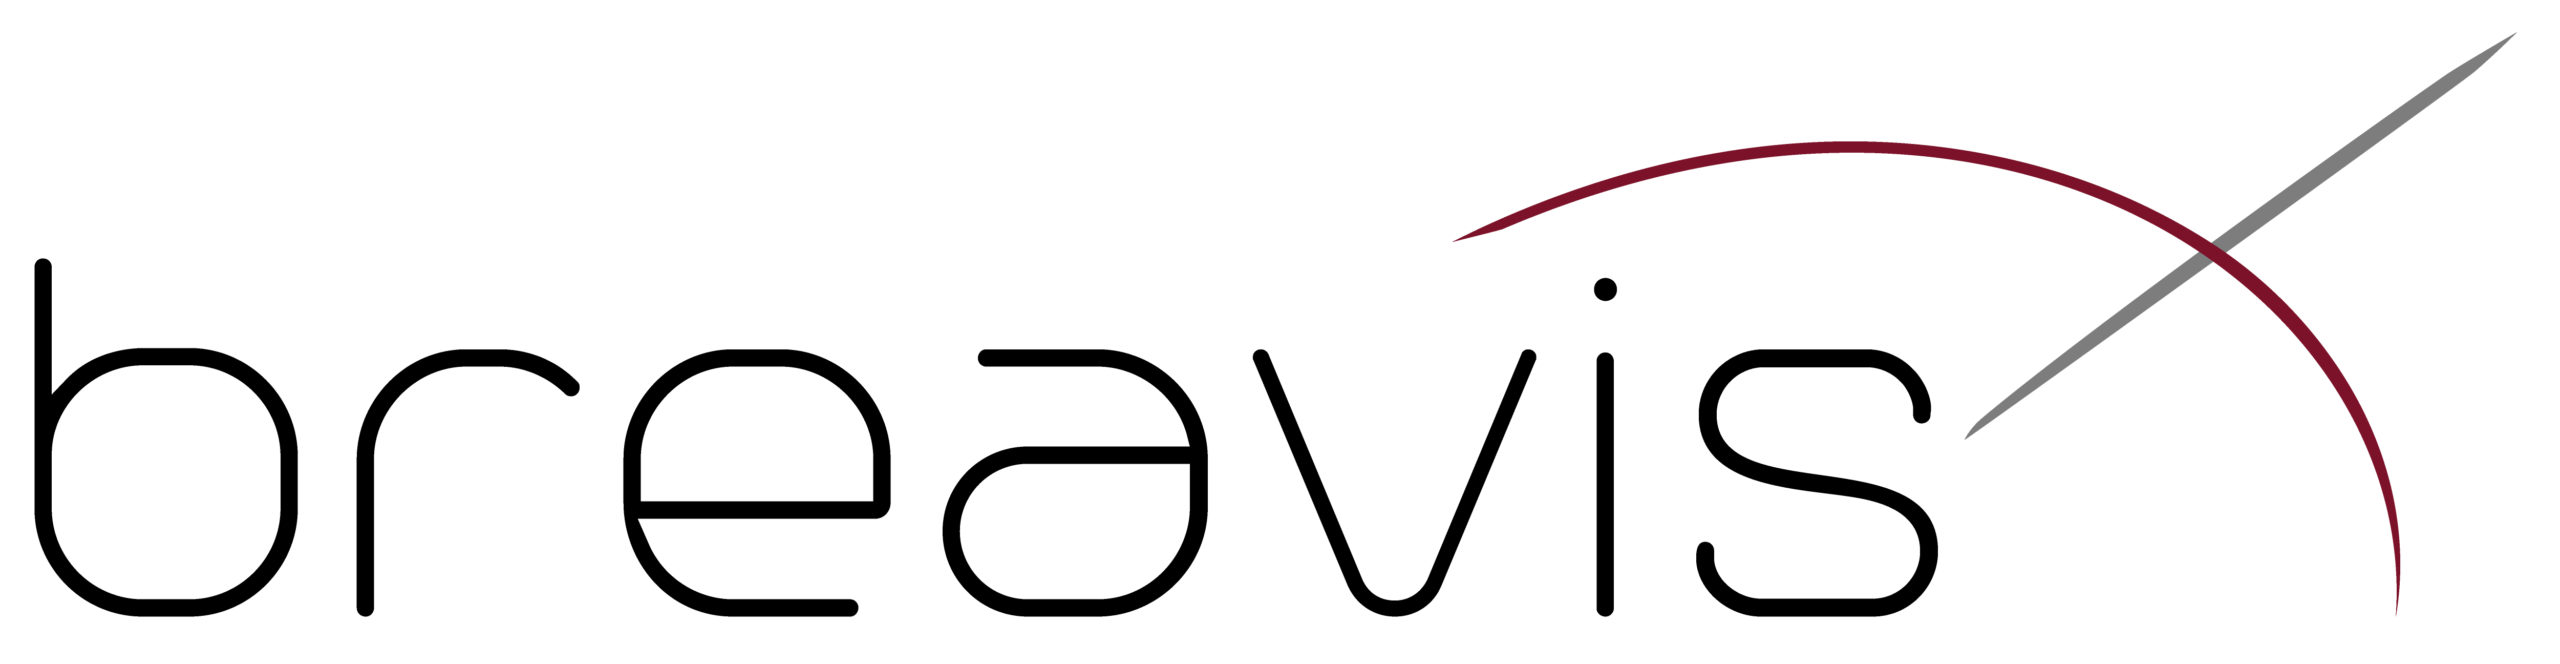 Breavis_logo